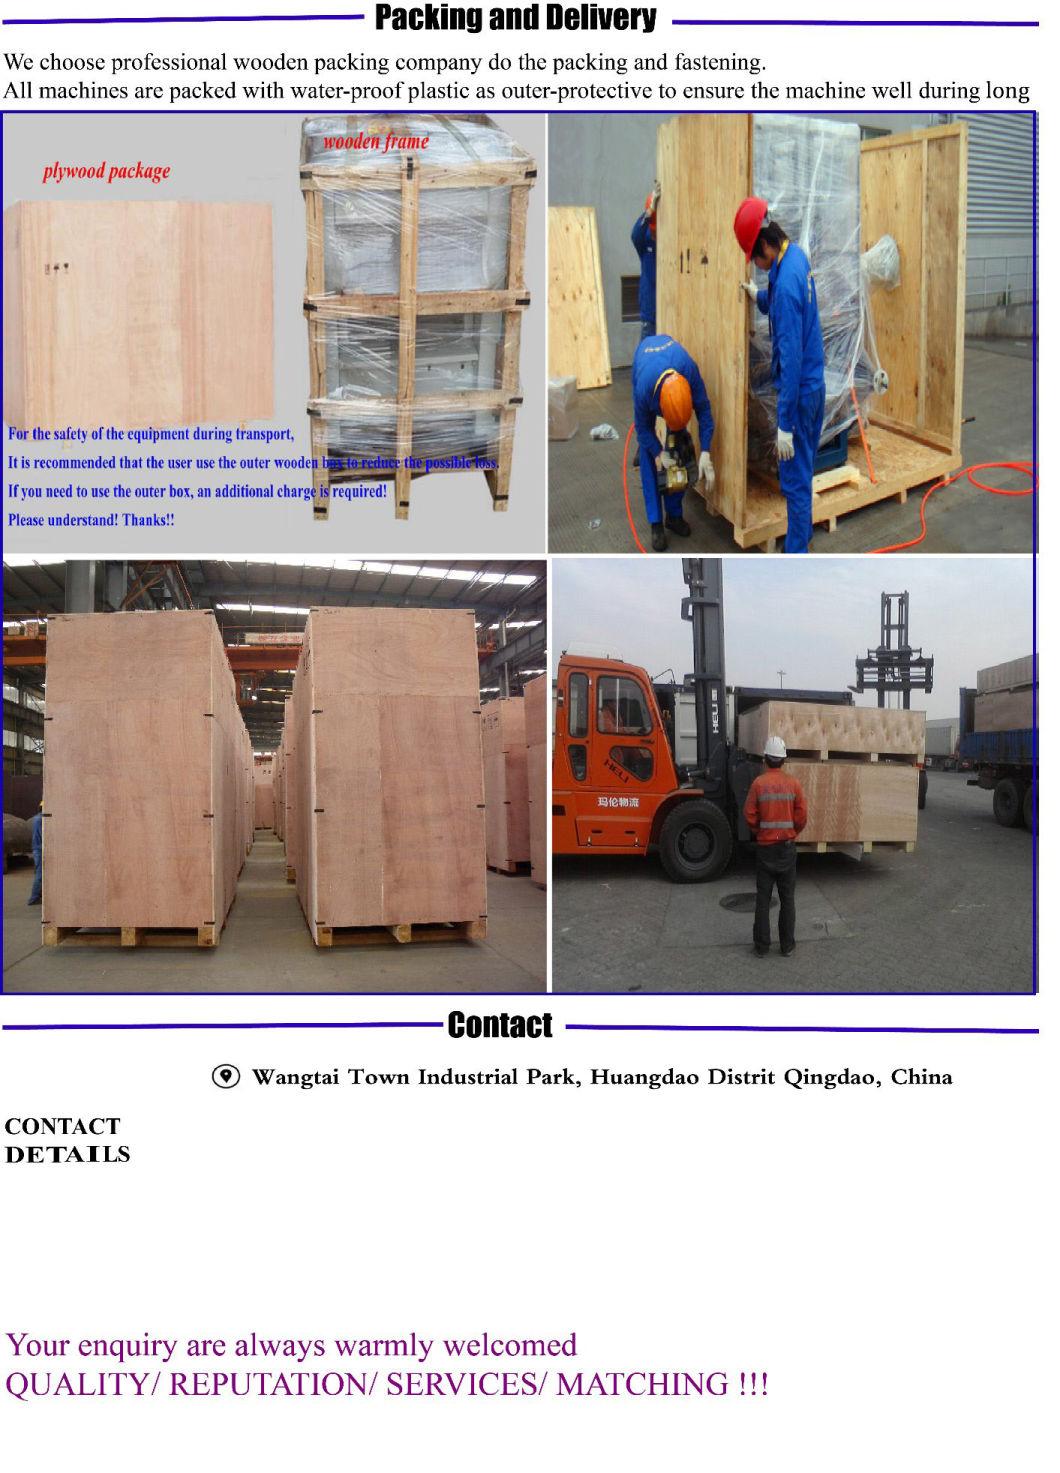 Qingdao Xinlihui Wholesale Price Customized Voltage 5.5 Kw 90 Degree Sliding Table Saw/Sliding Table Panel Saw Wood Based Panel Saw Machinery